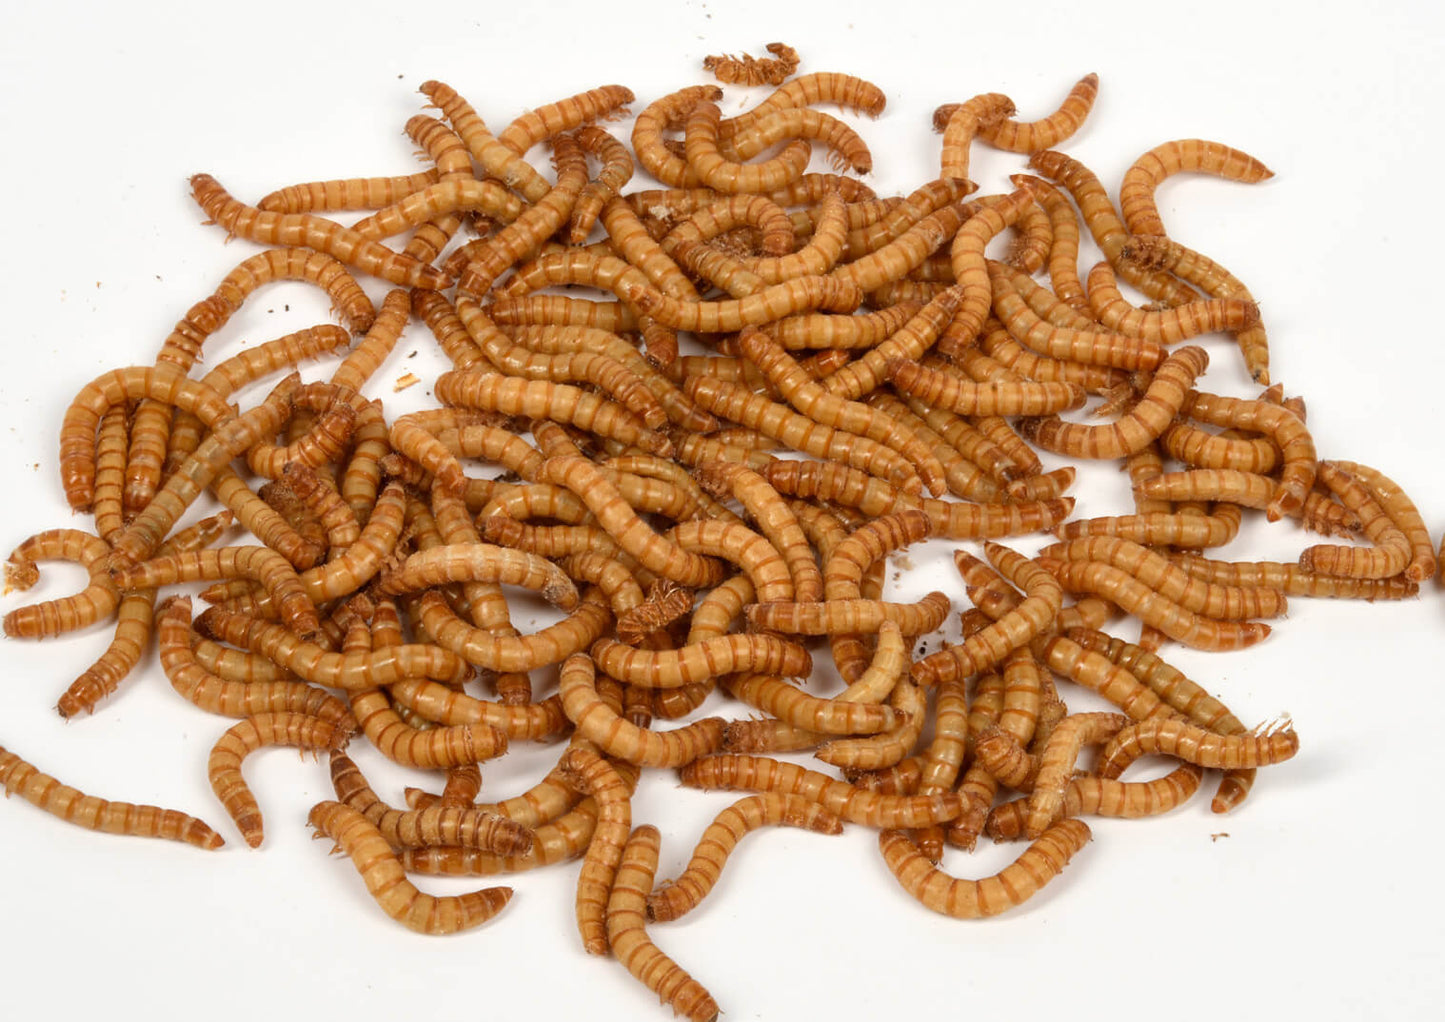 Tenebrio molitor or mealworm (2.5cm approx)